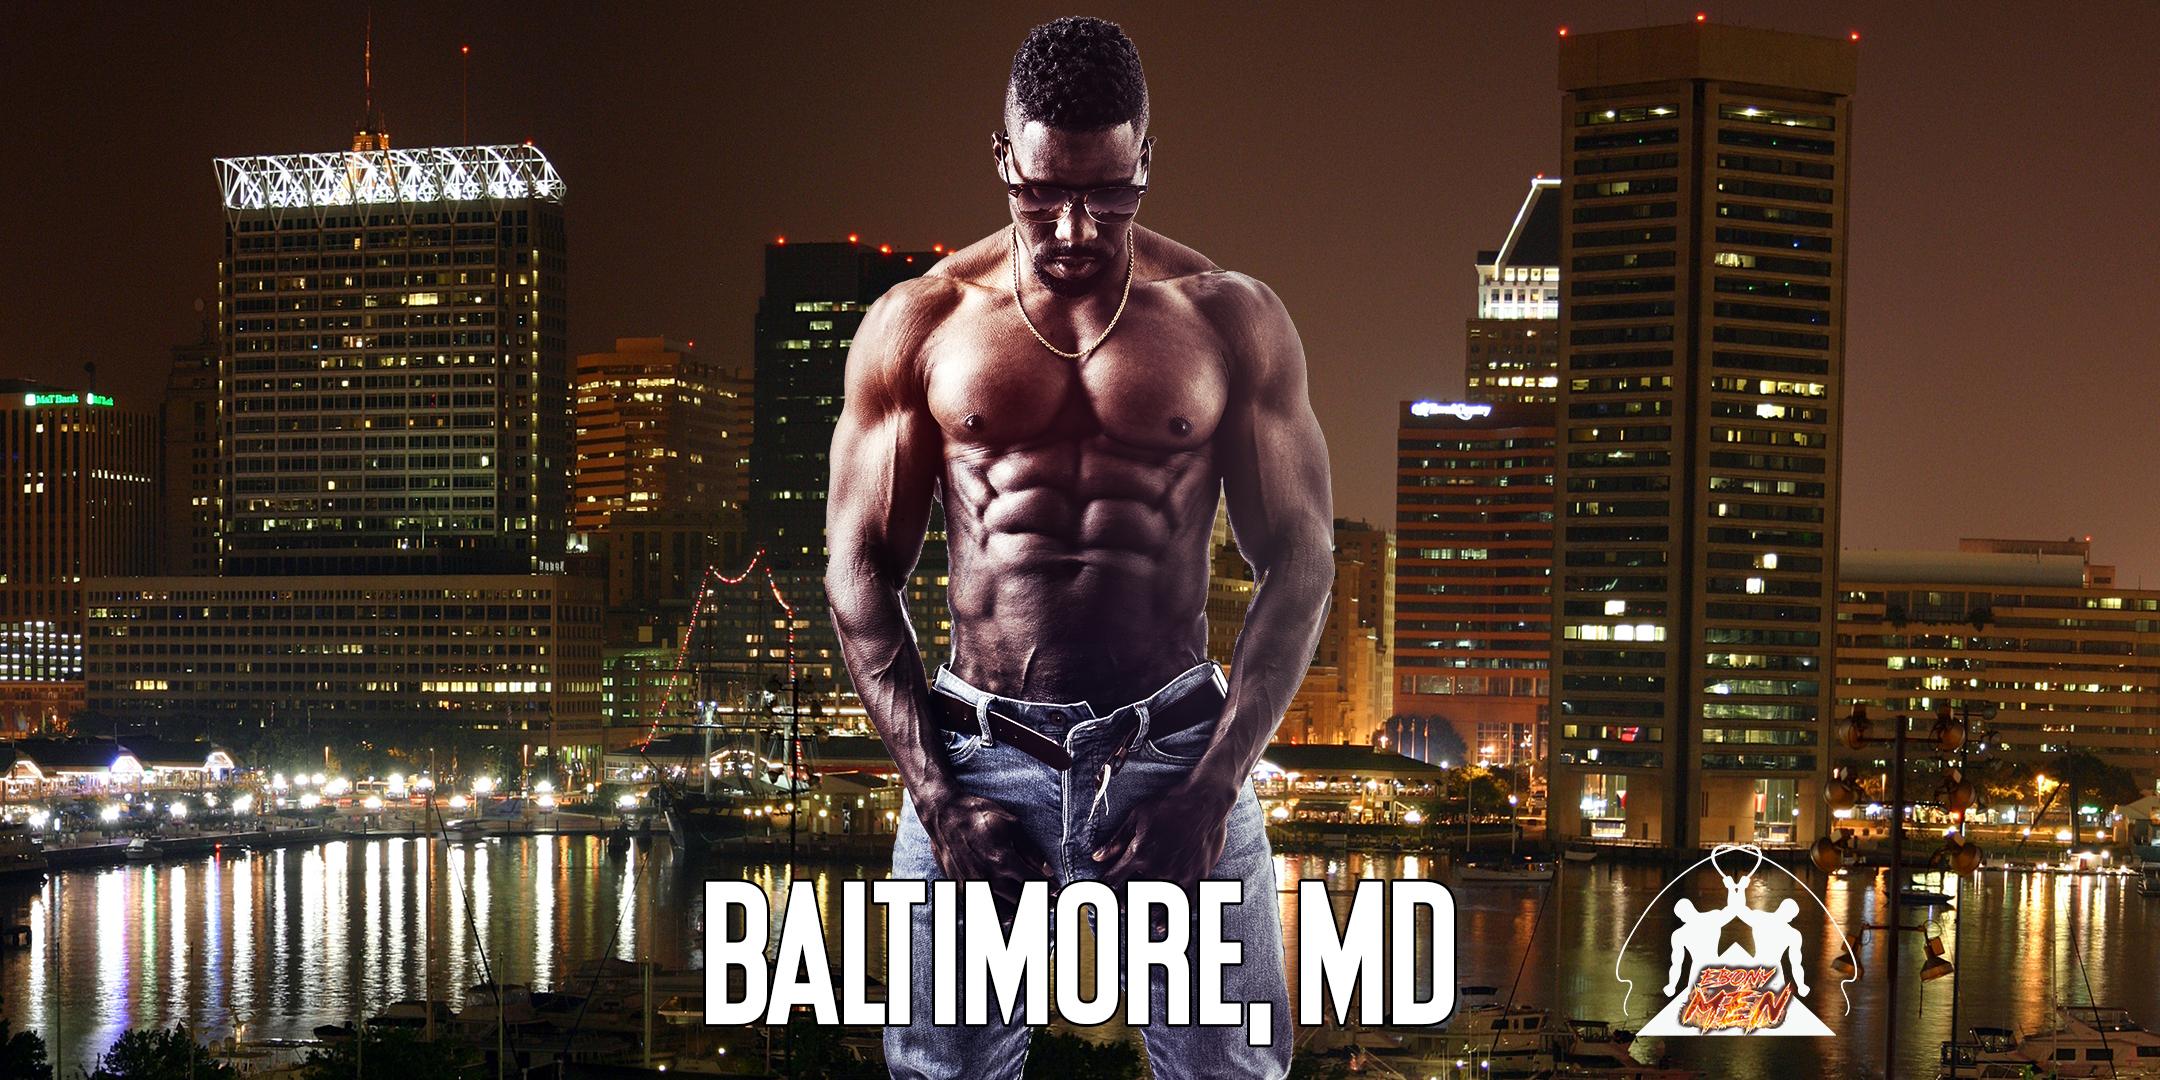 Ebony Men Black Male Revue Strip Clubs & Black Male Strippers Baltimore, MD 8-10 PM